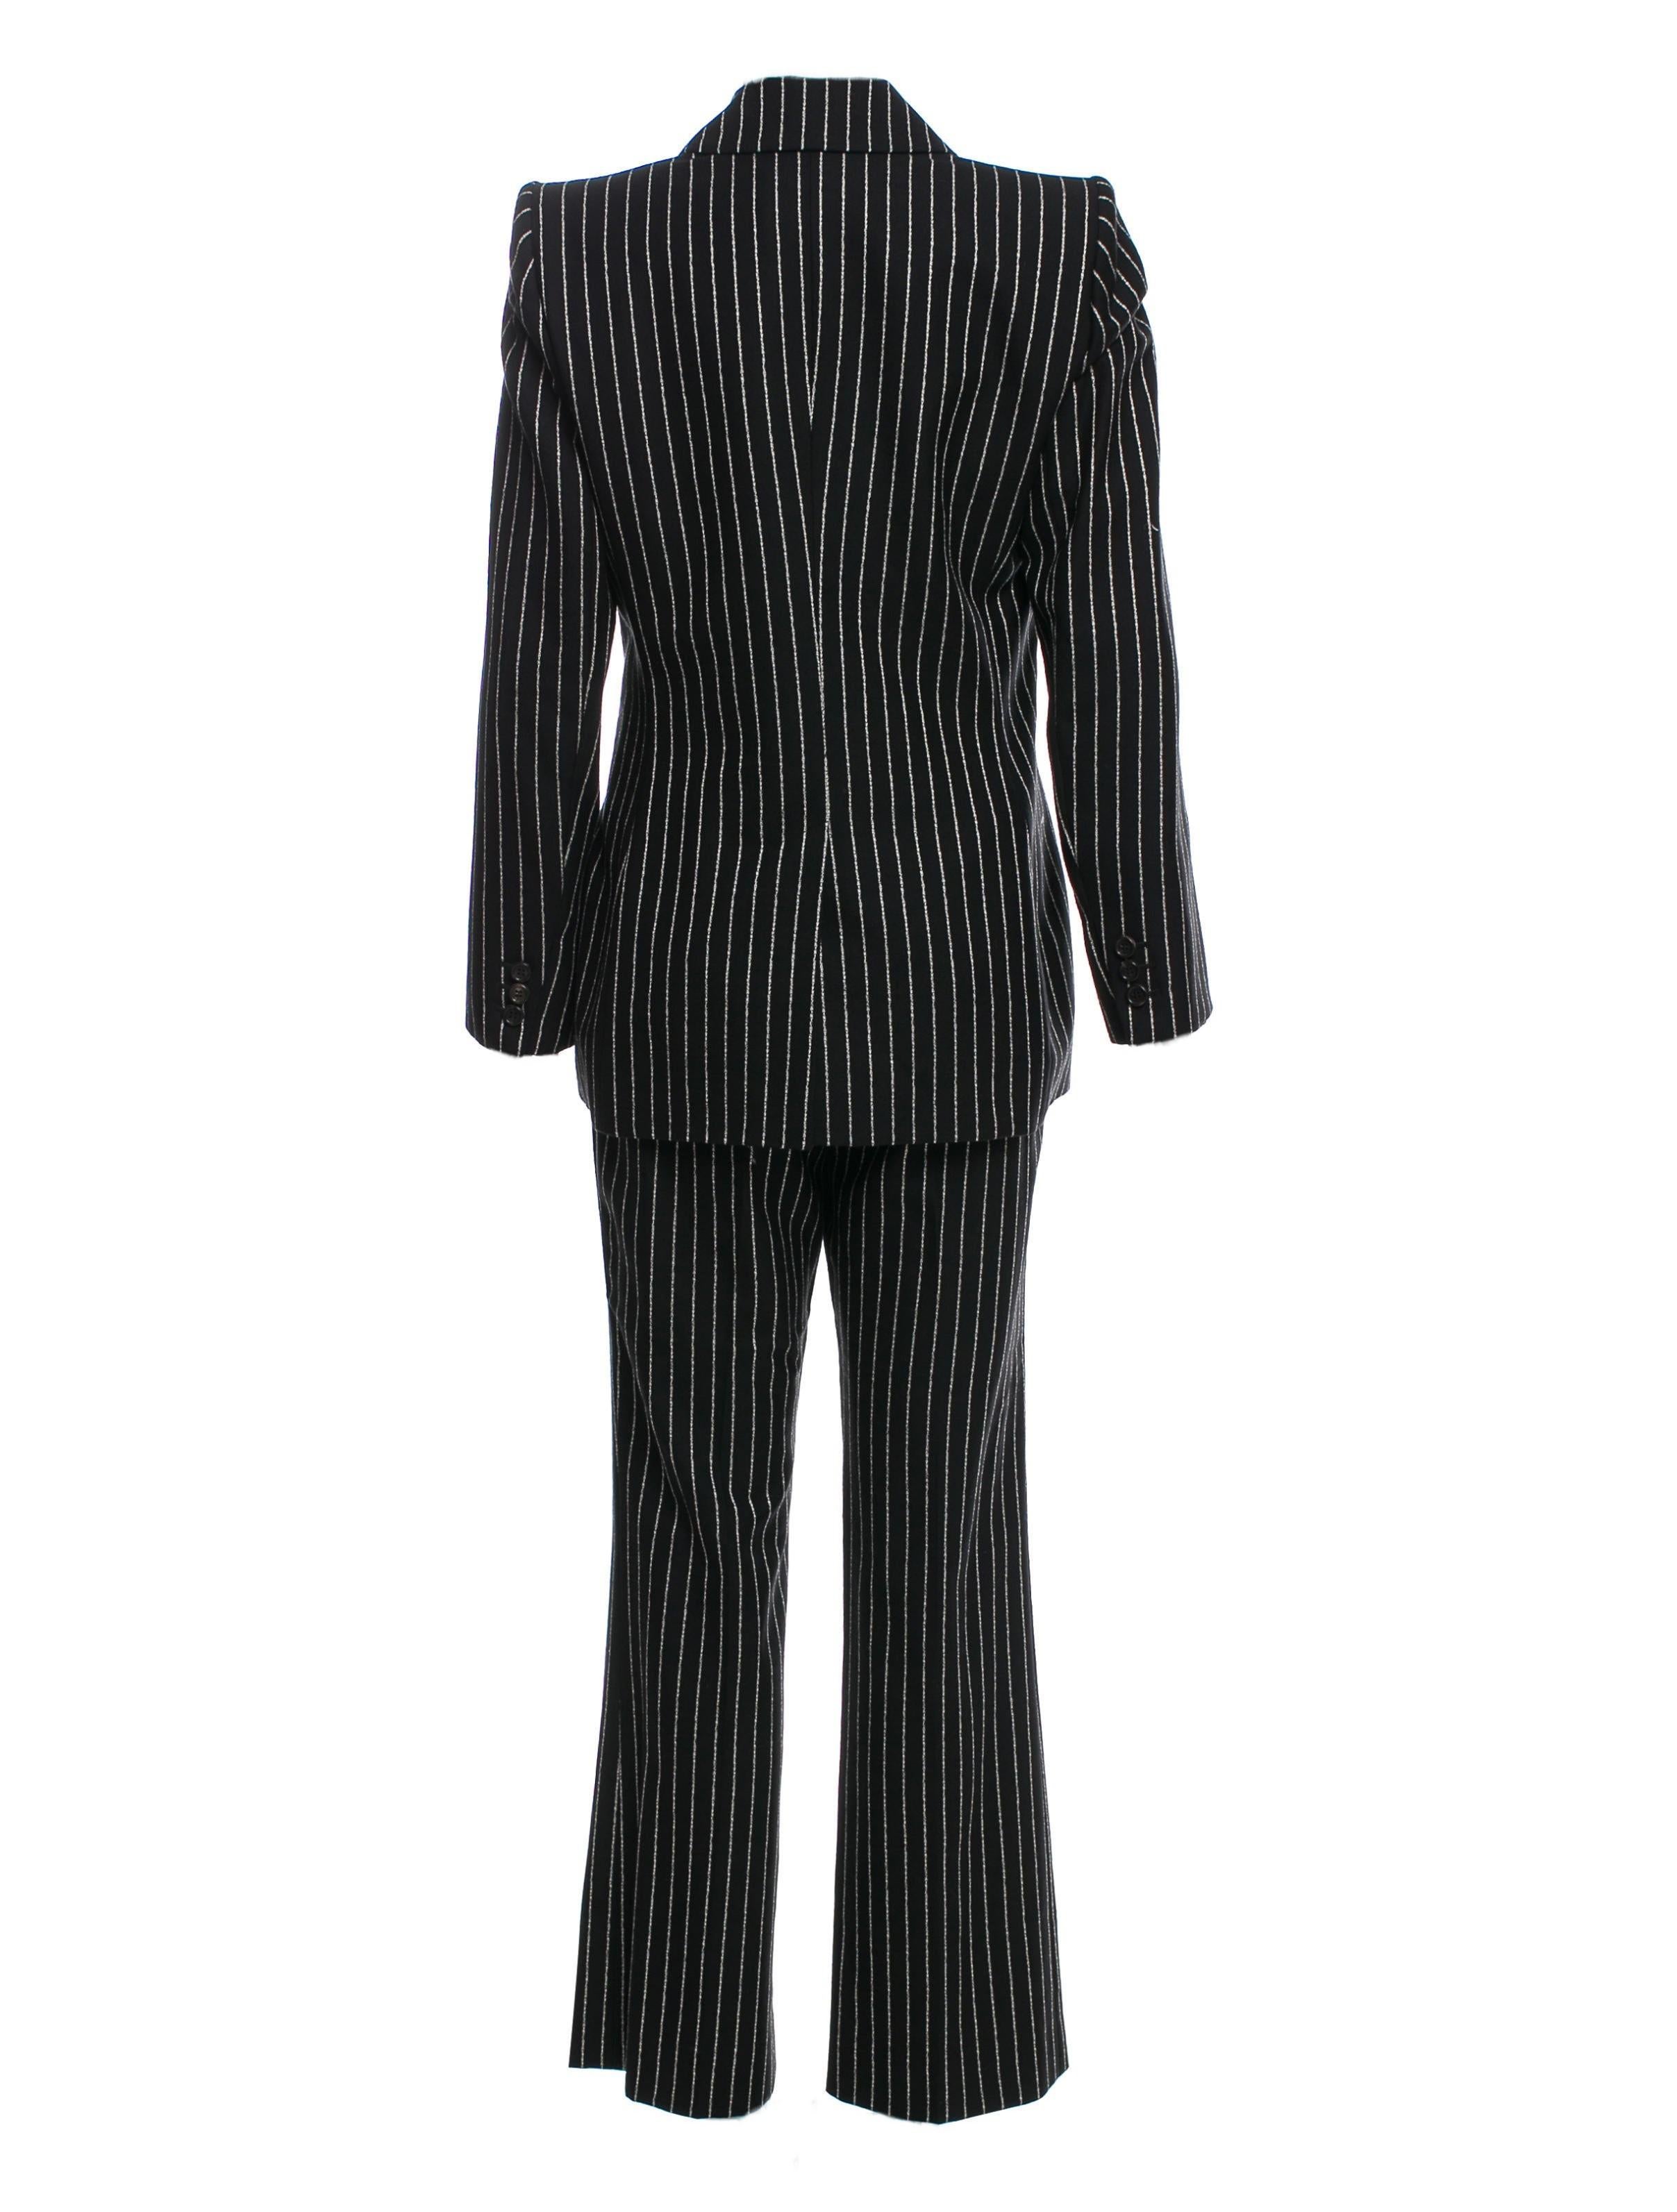 New Tom Ford For Yves Saint Laurent YSL Pinstripe Pantsuit Suit FR40 2